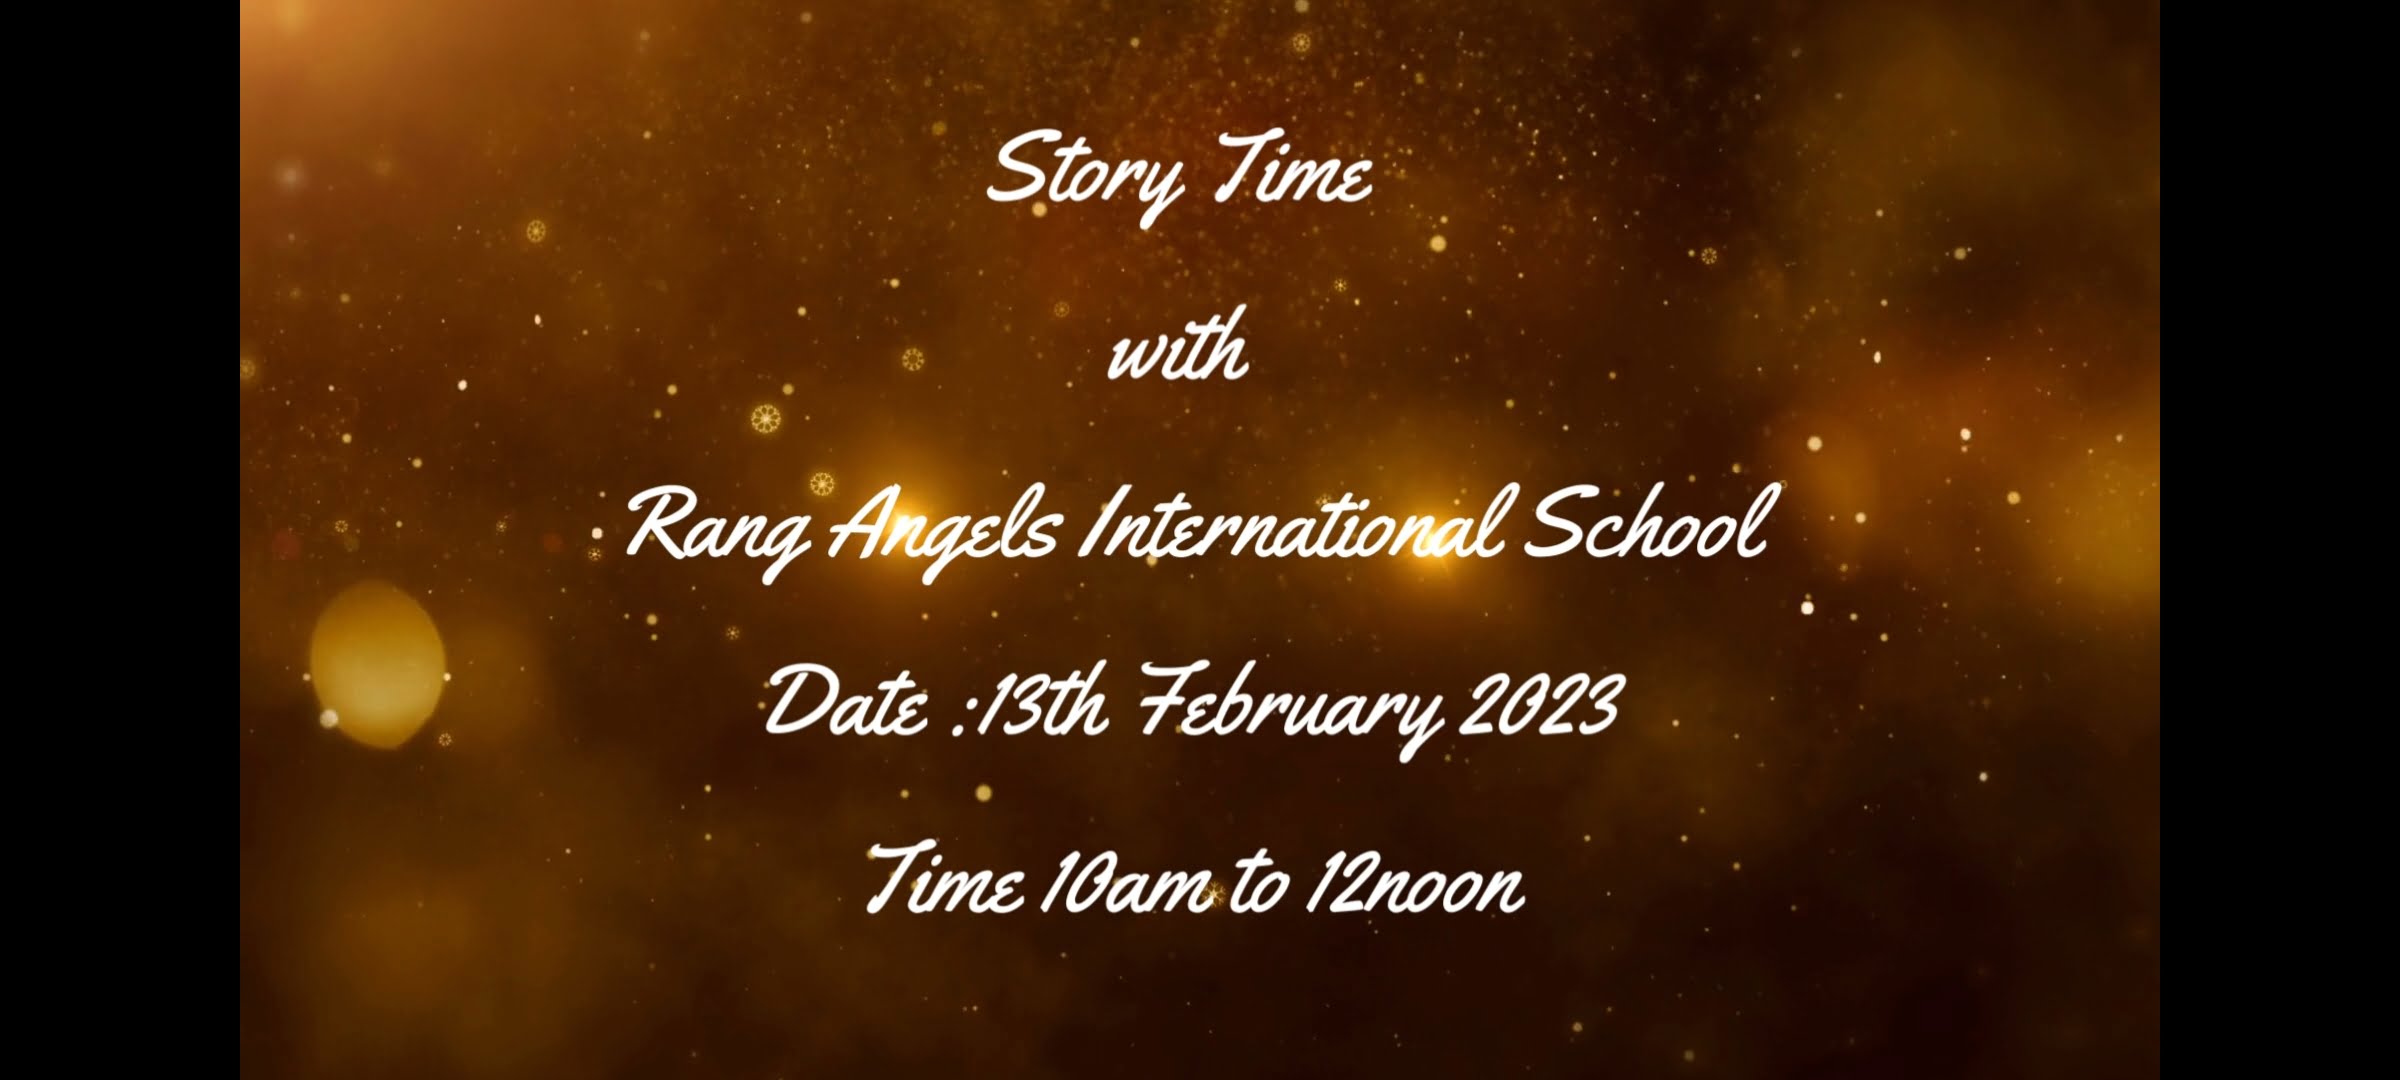 STORYTIME at Rang Angel International School